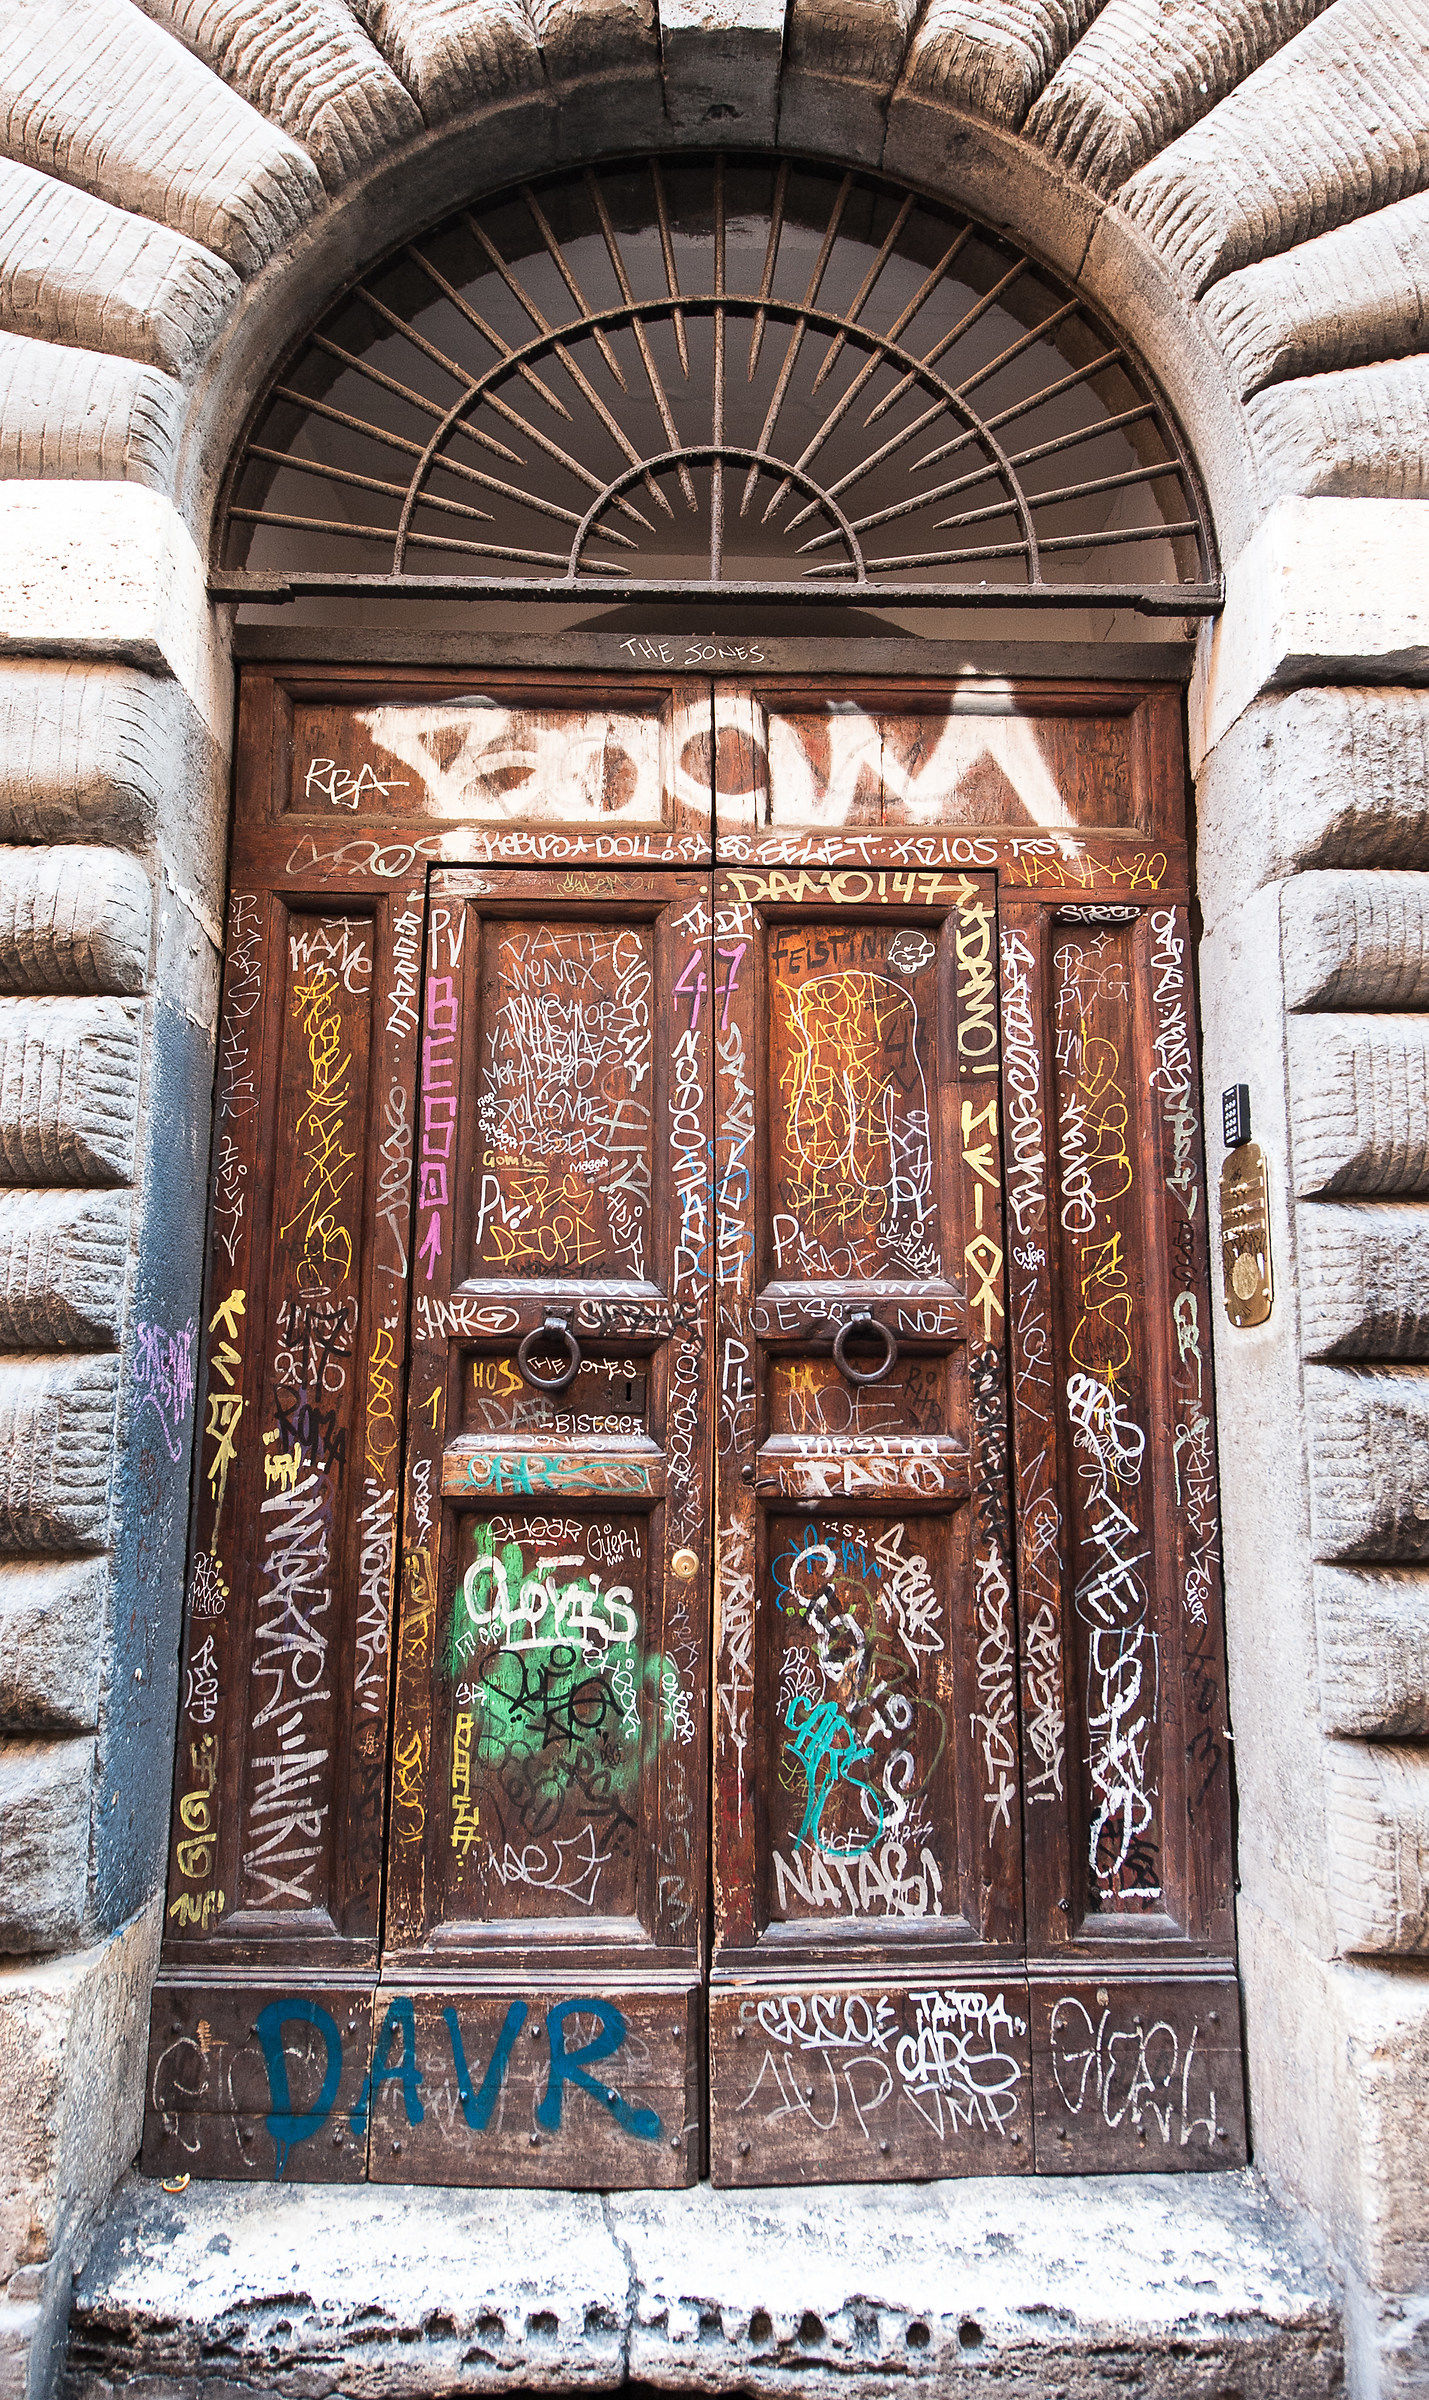 Roma Trastevere-Art or vandalism?...